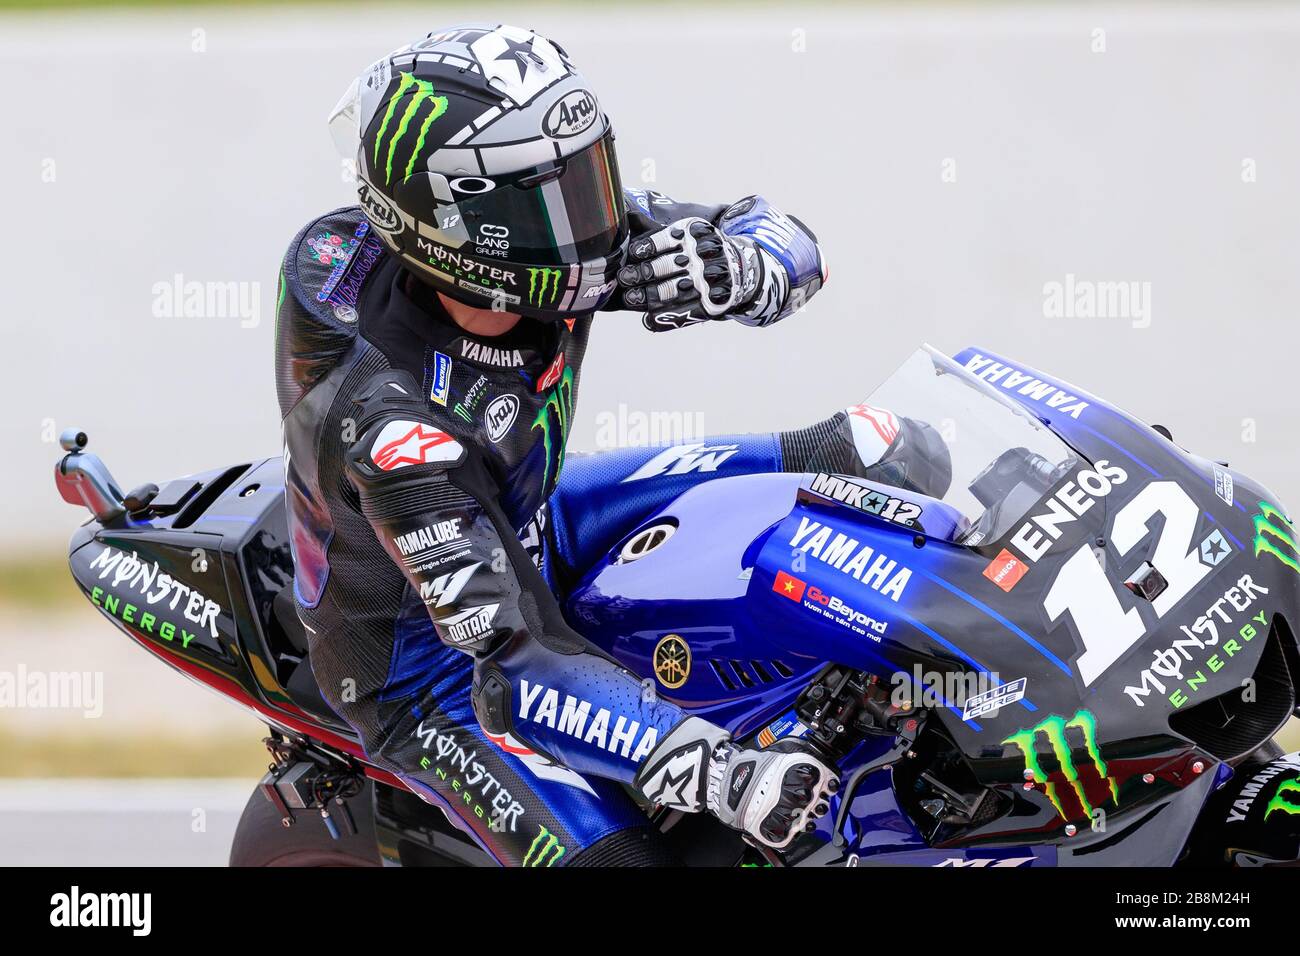 MONTMELO, SPANIEN - 14. JUNI: Maverick Vinales von Monster Energy Yamaha MotoGP während der kostenlosen MotoGP-Übung auf dem Circuit de Catalunya am 14. Juni 2019 i. Stockfoto